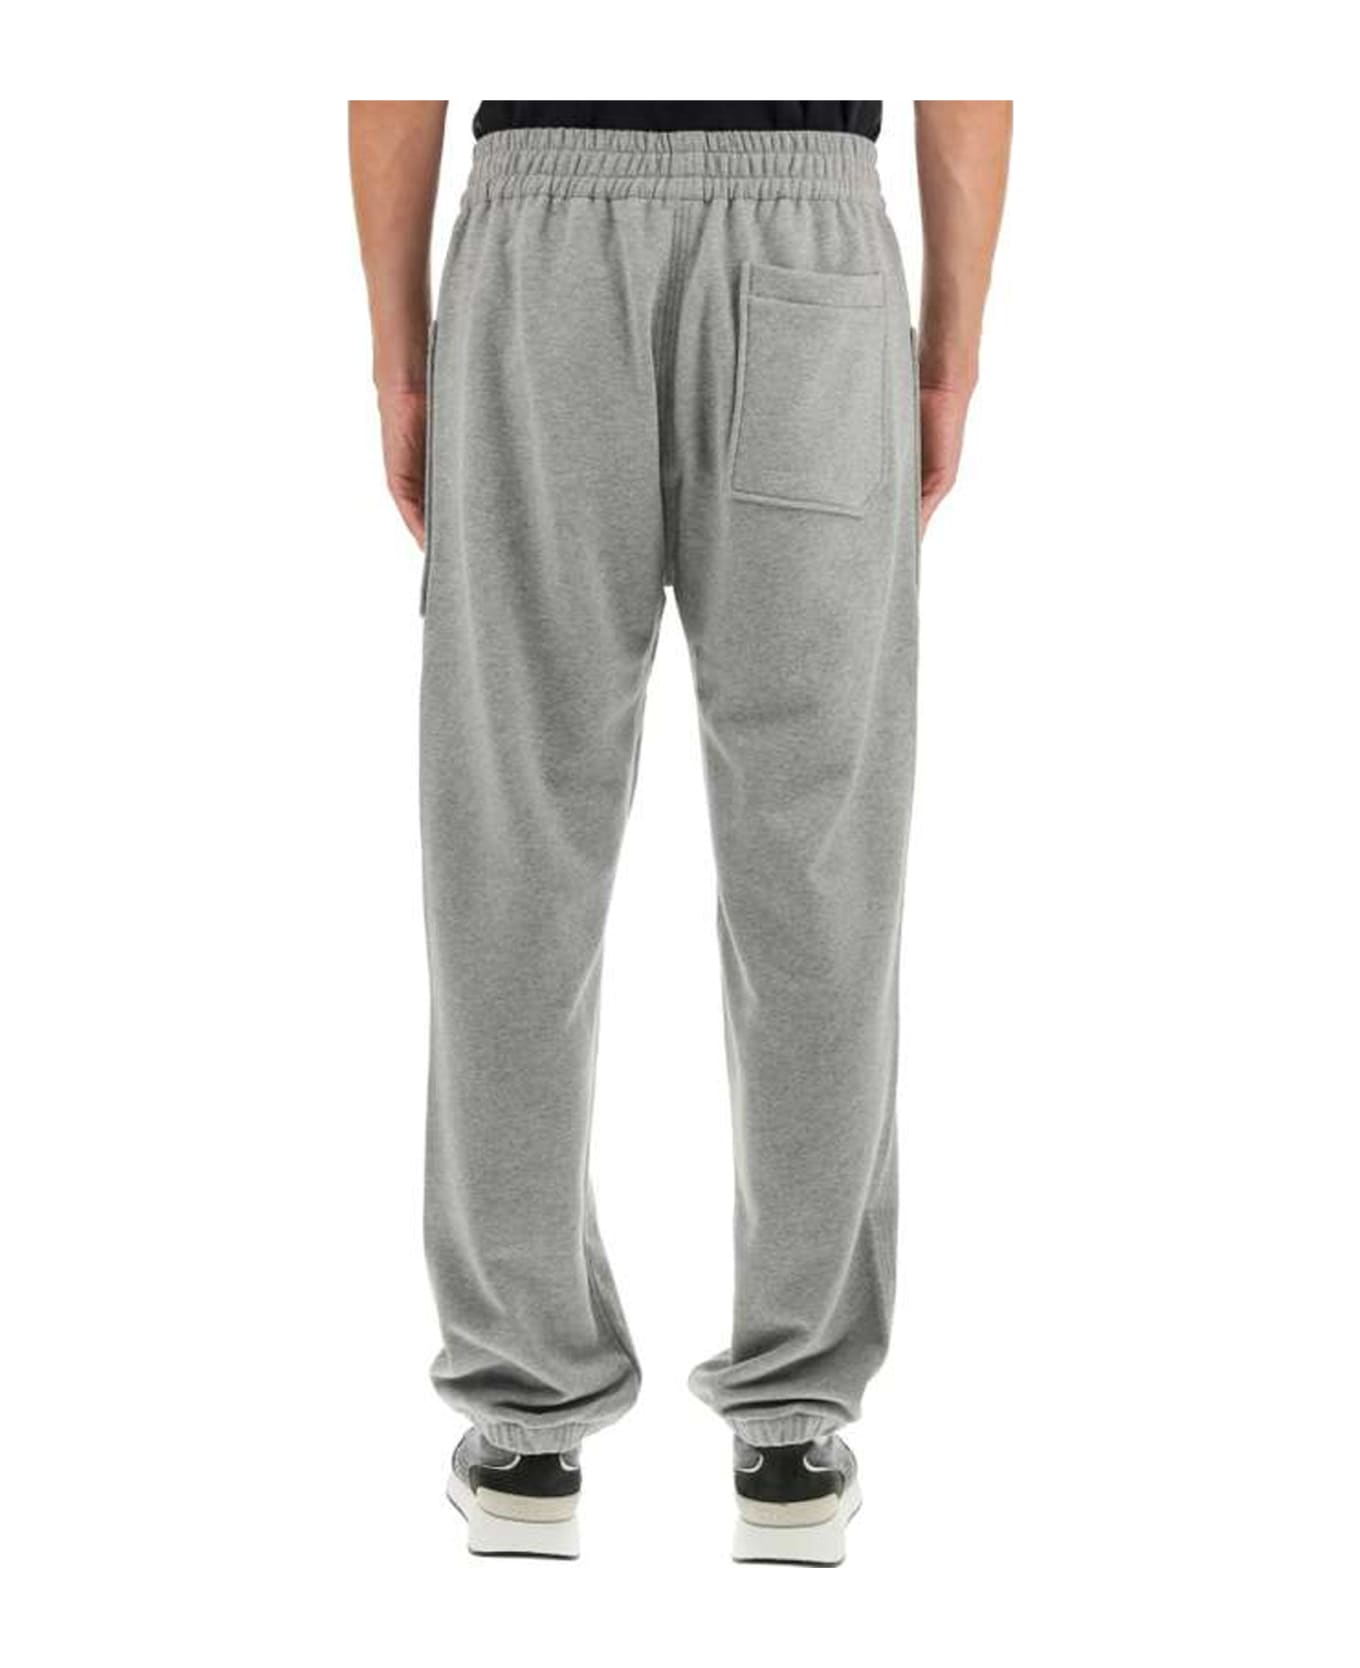 Zegna Cotton Sweatpants - Gray